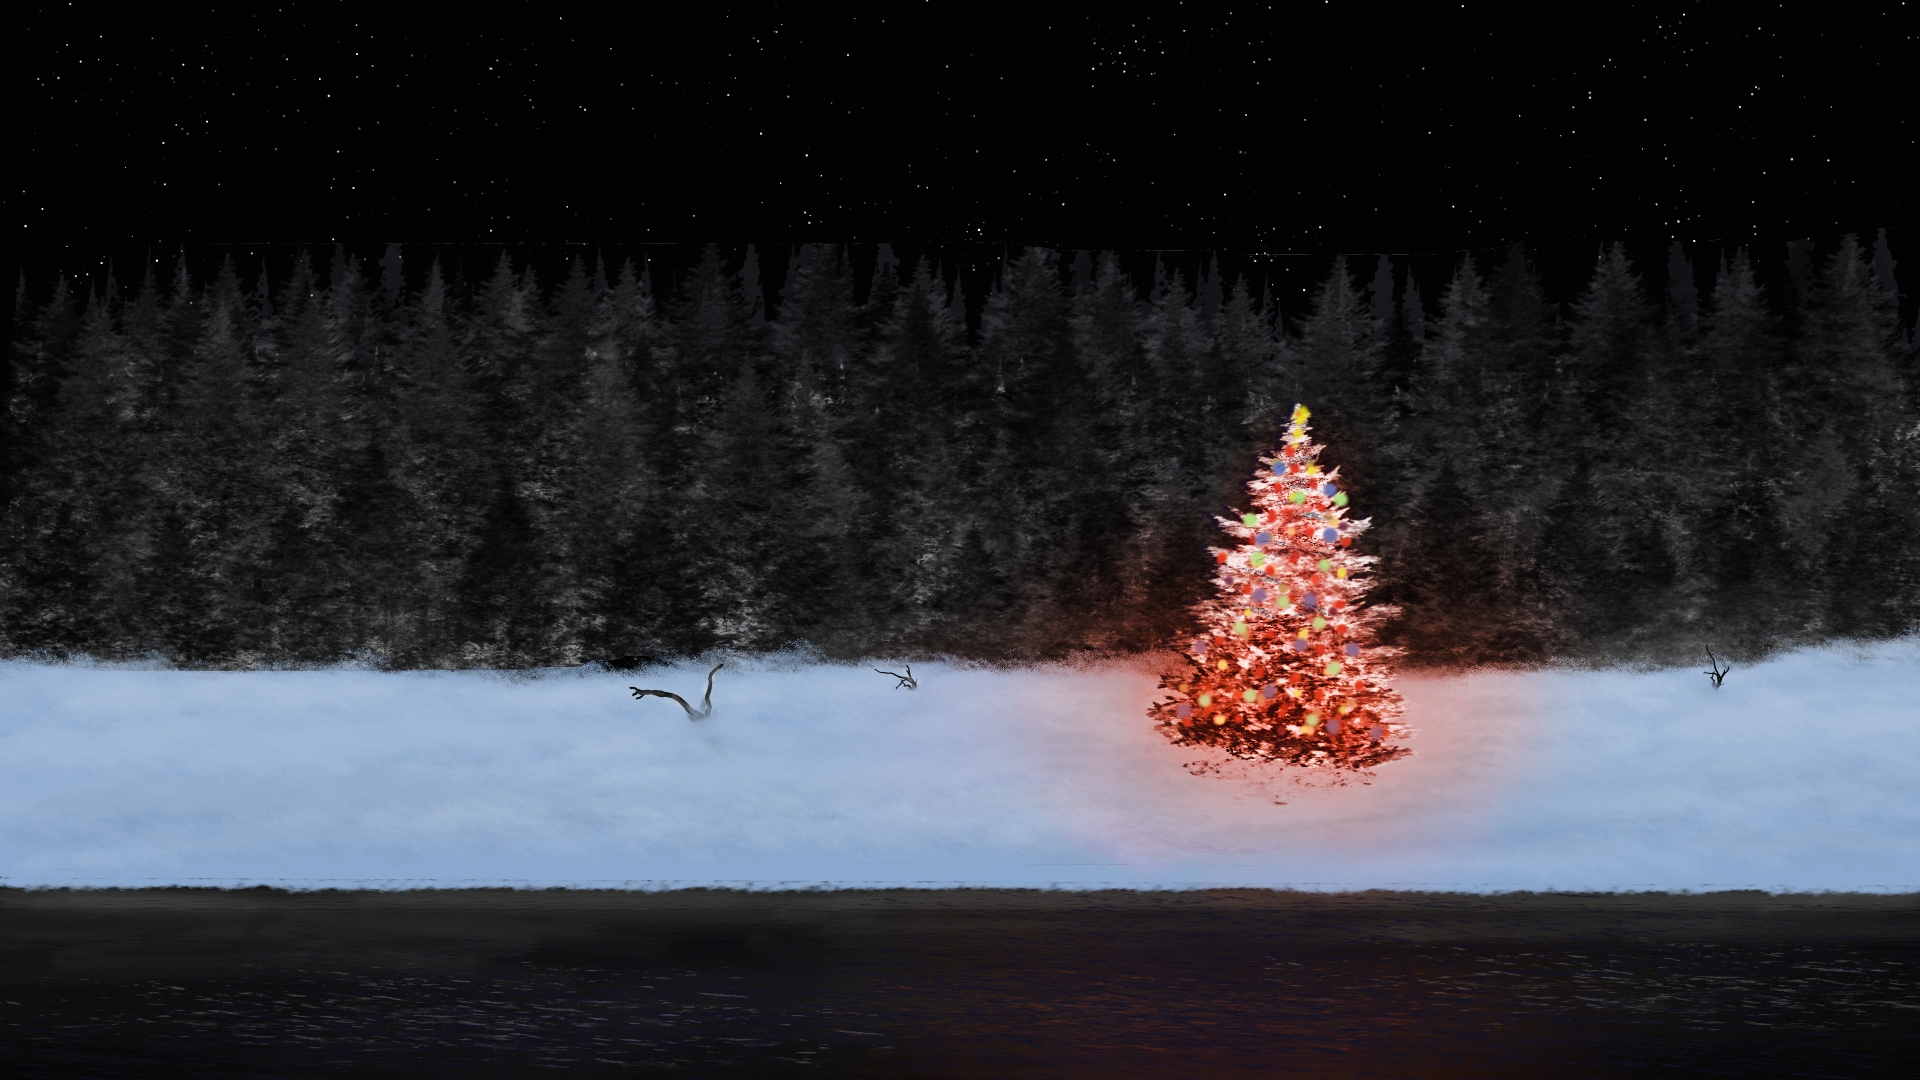 Digital Art Digital Painting Nature Christmas Christmas Tree Holiday Winter Snow Trees 1920x1080